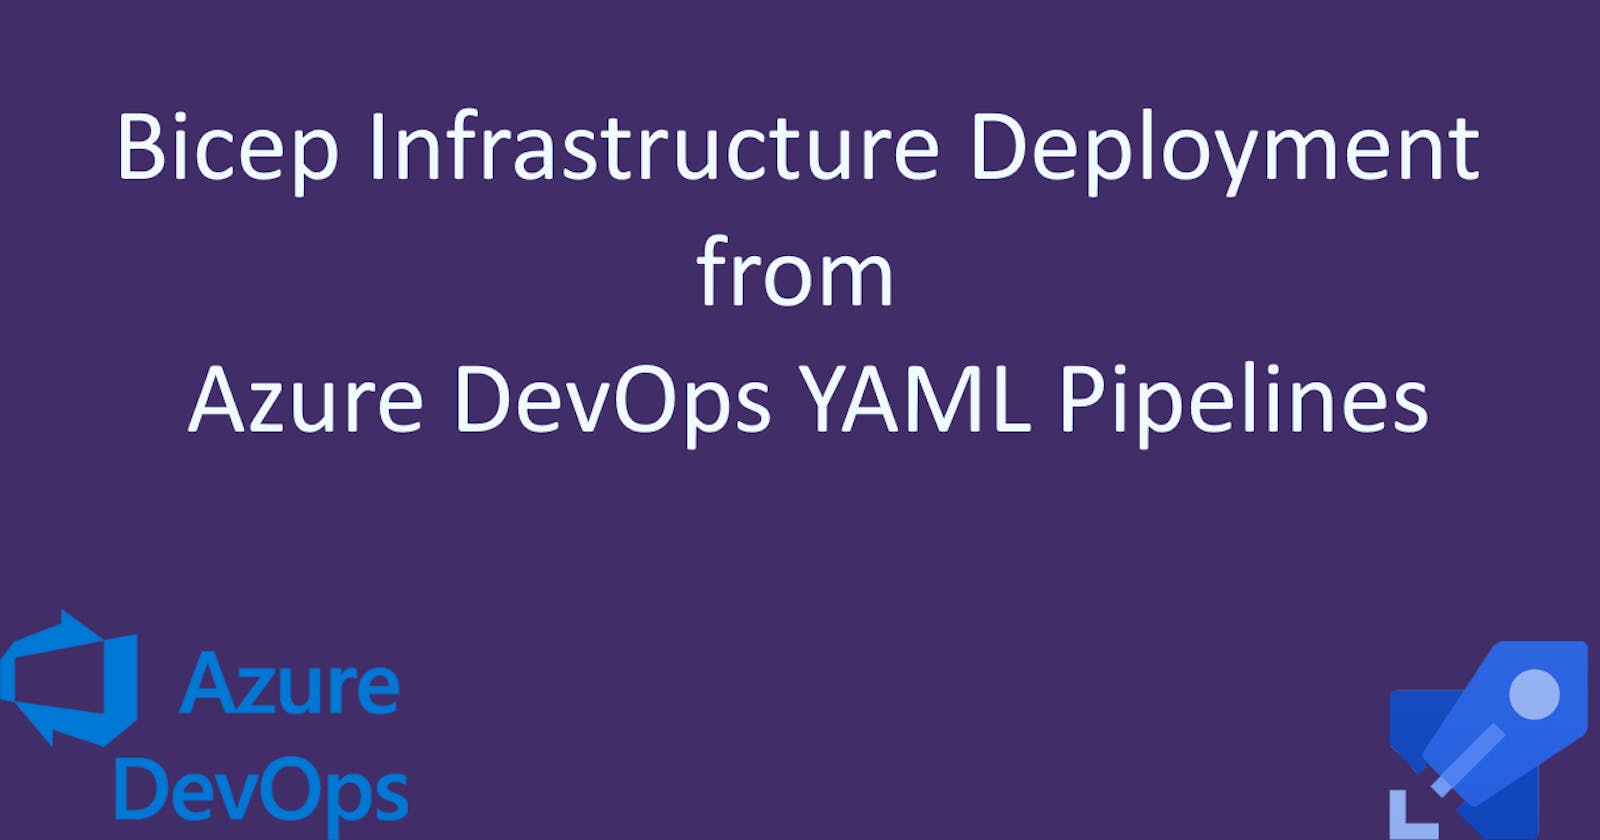 Bicep Infrastructure Deployment from Azure DevOps YAML Pipelines